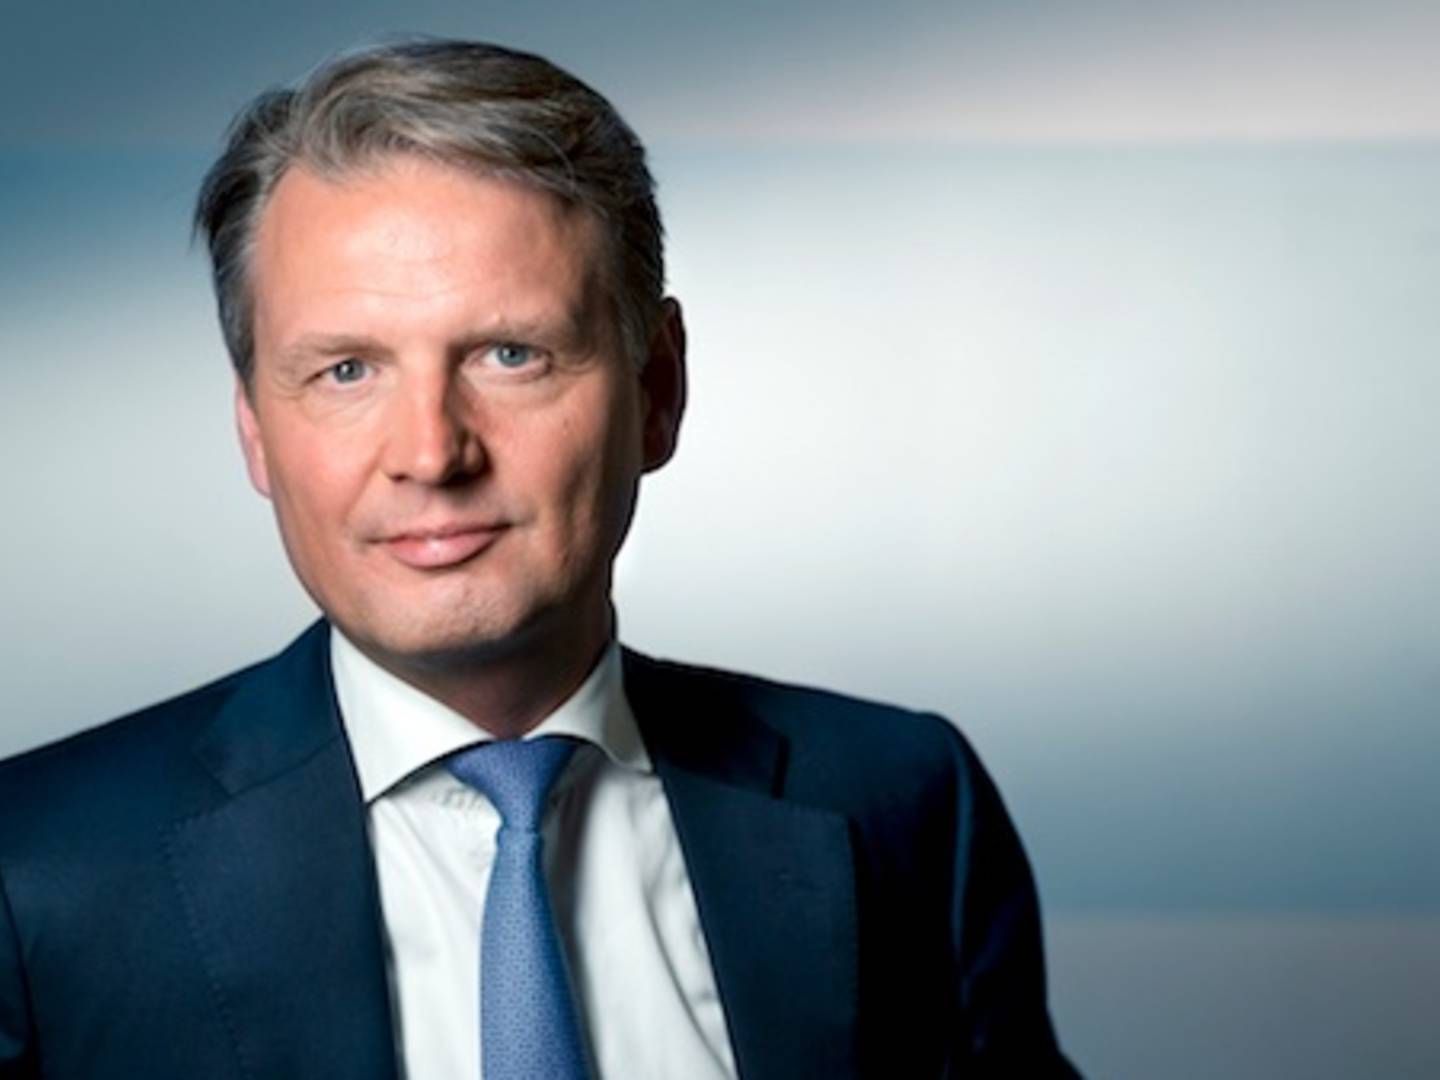 Henrik Ramskov is managing partner at Navigare Capital Partners | Foto: Navigare Capital Partners